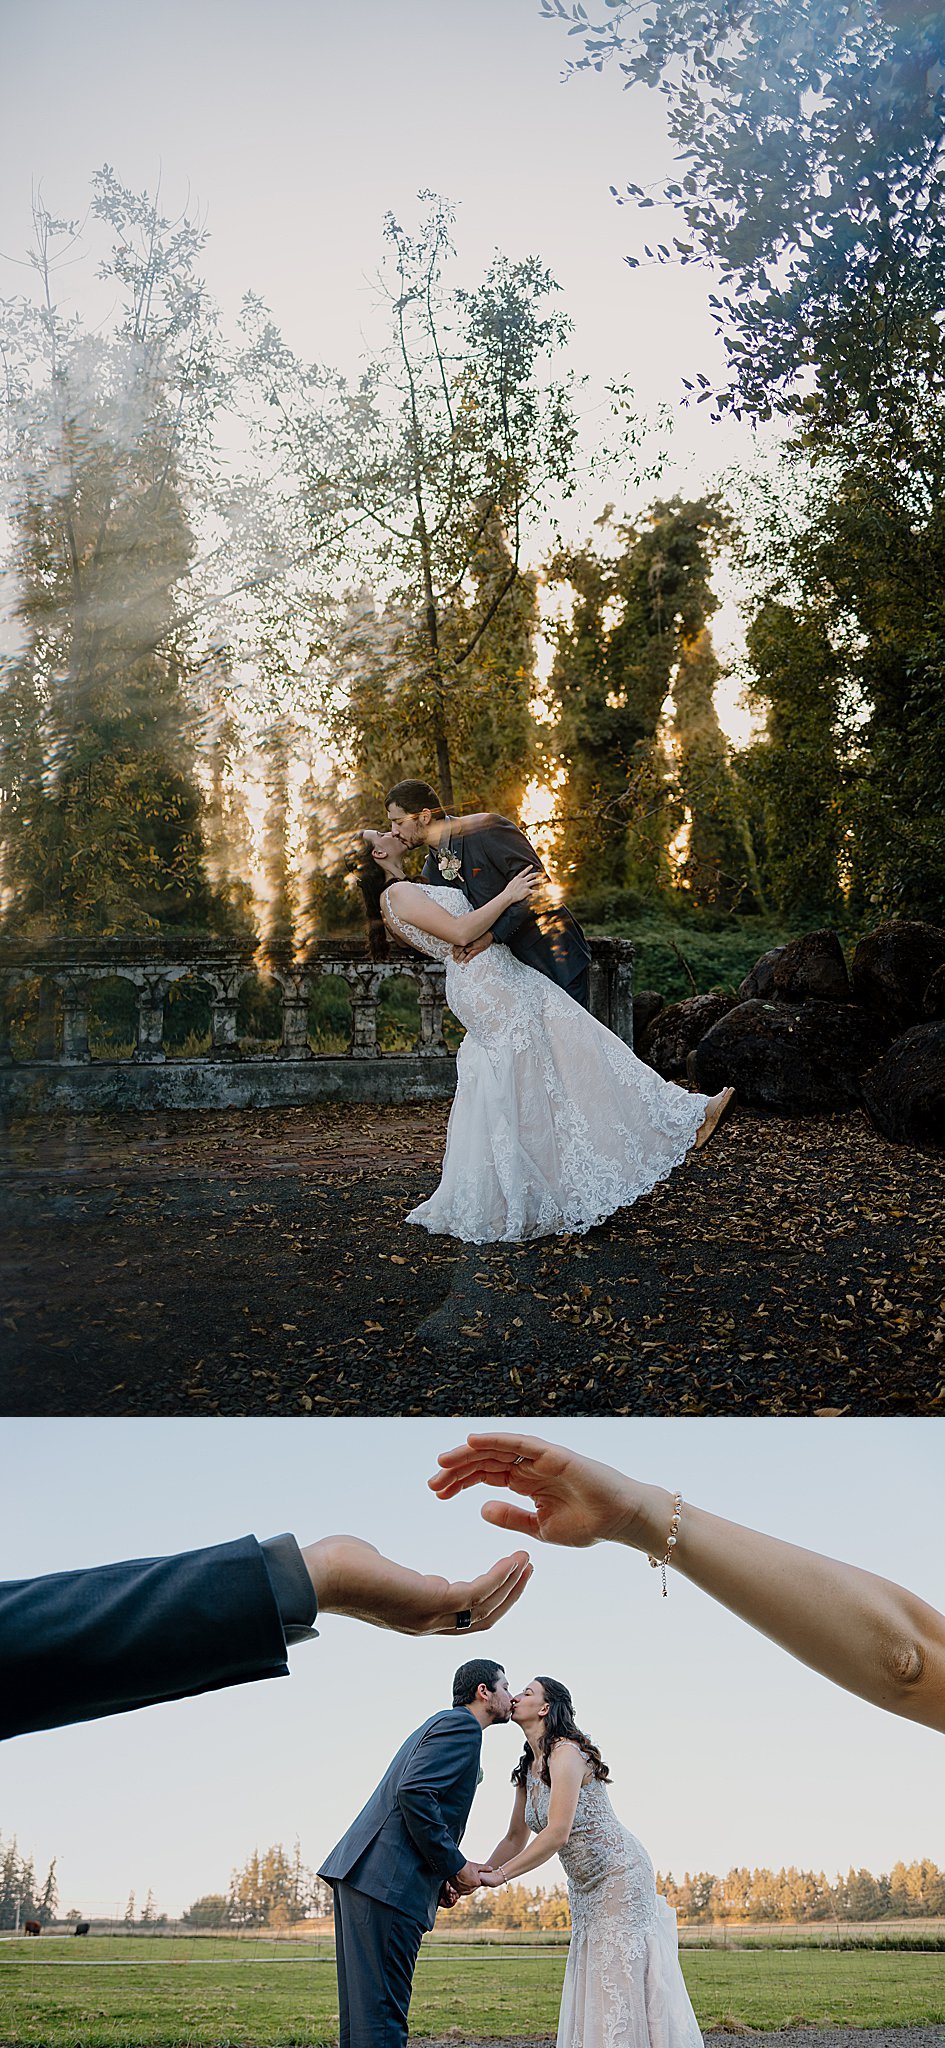 withstylePhotography_Oregon city Photographer_ Portland wedding photographer_Vanderbeck vally farms wedding_Oregon elopment Photographer0060.jpg